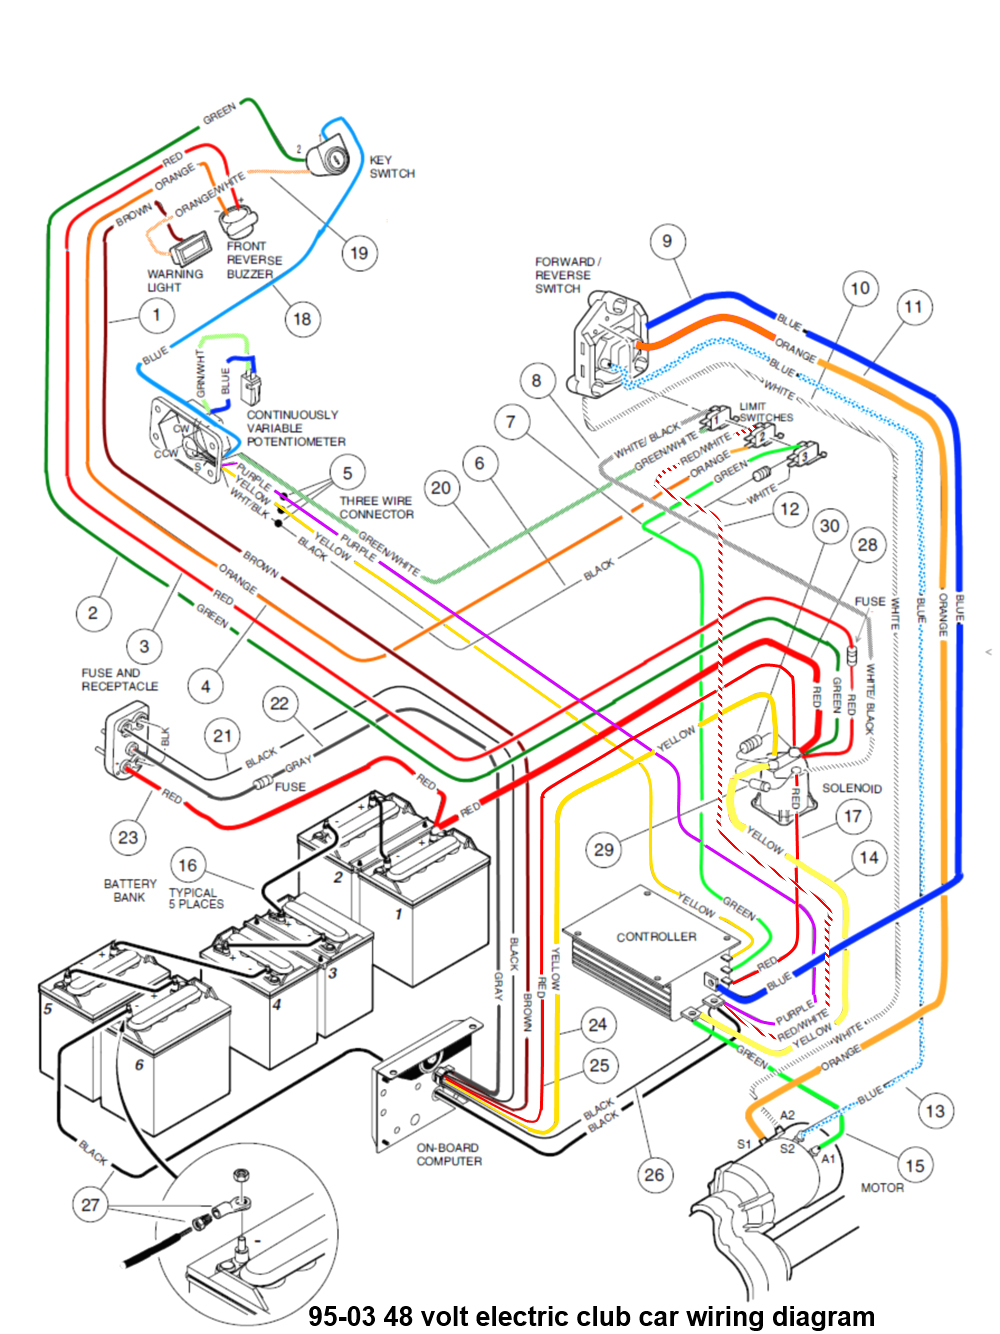 Automotive Wiring Diagram Software - Free Wiring Diagram Collection - Automotive Wiring Diagram Software